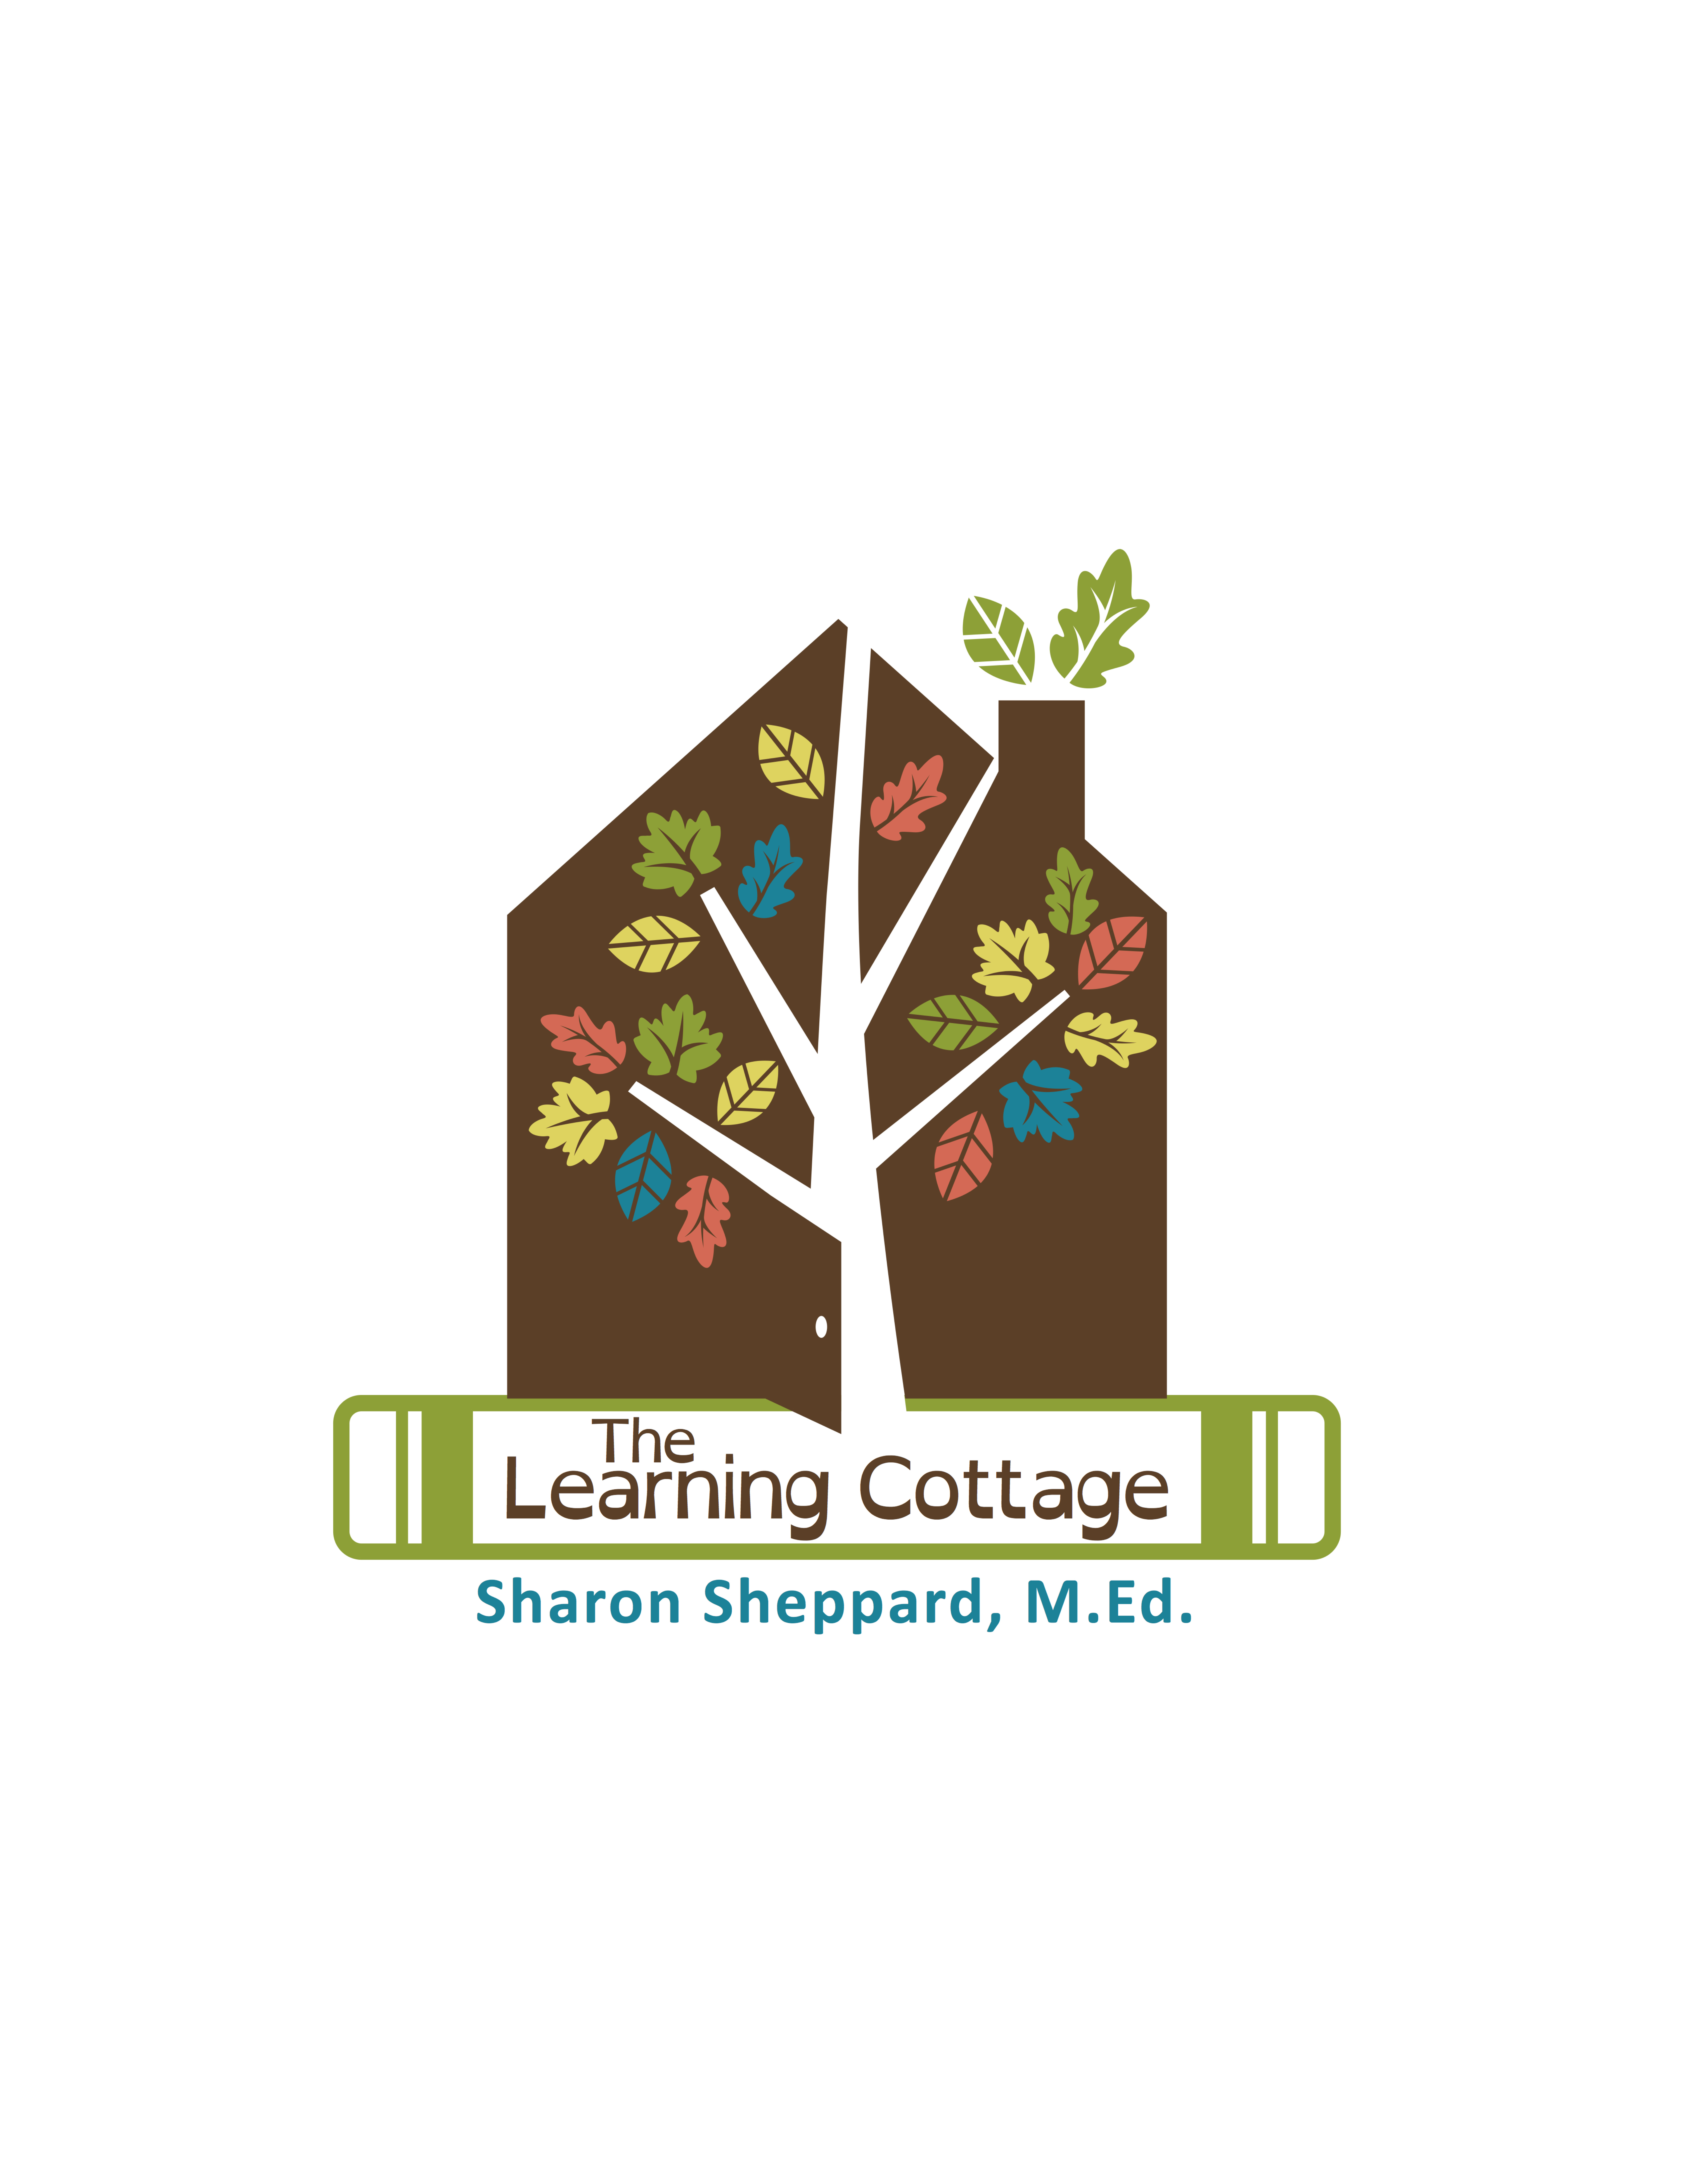 The Learning Cottage, Inc. logo